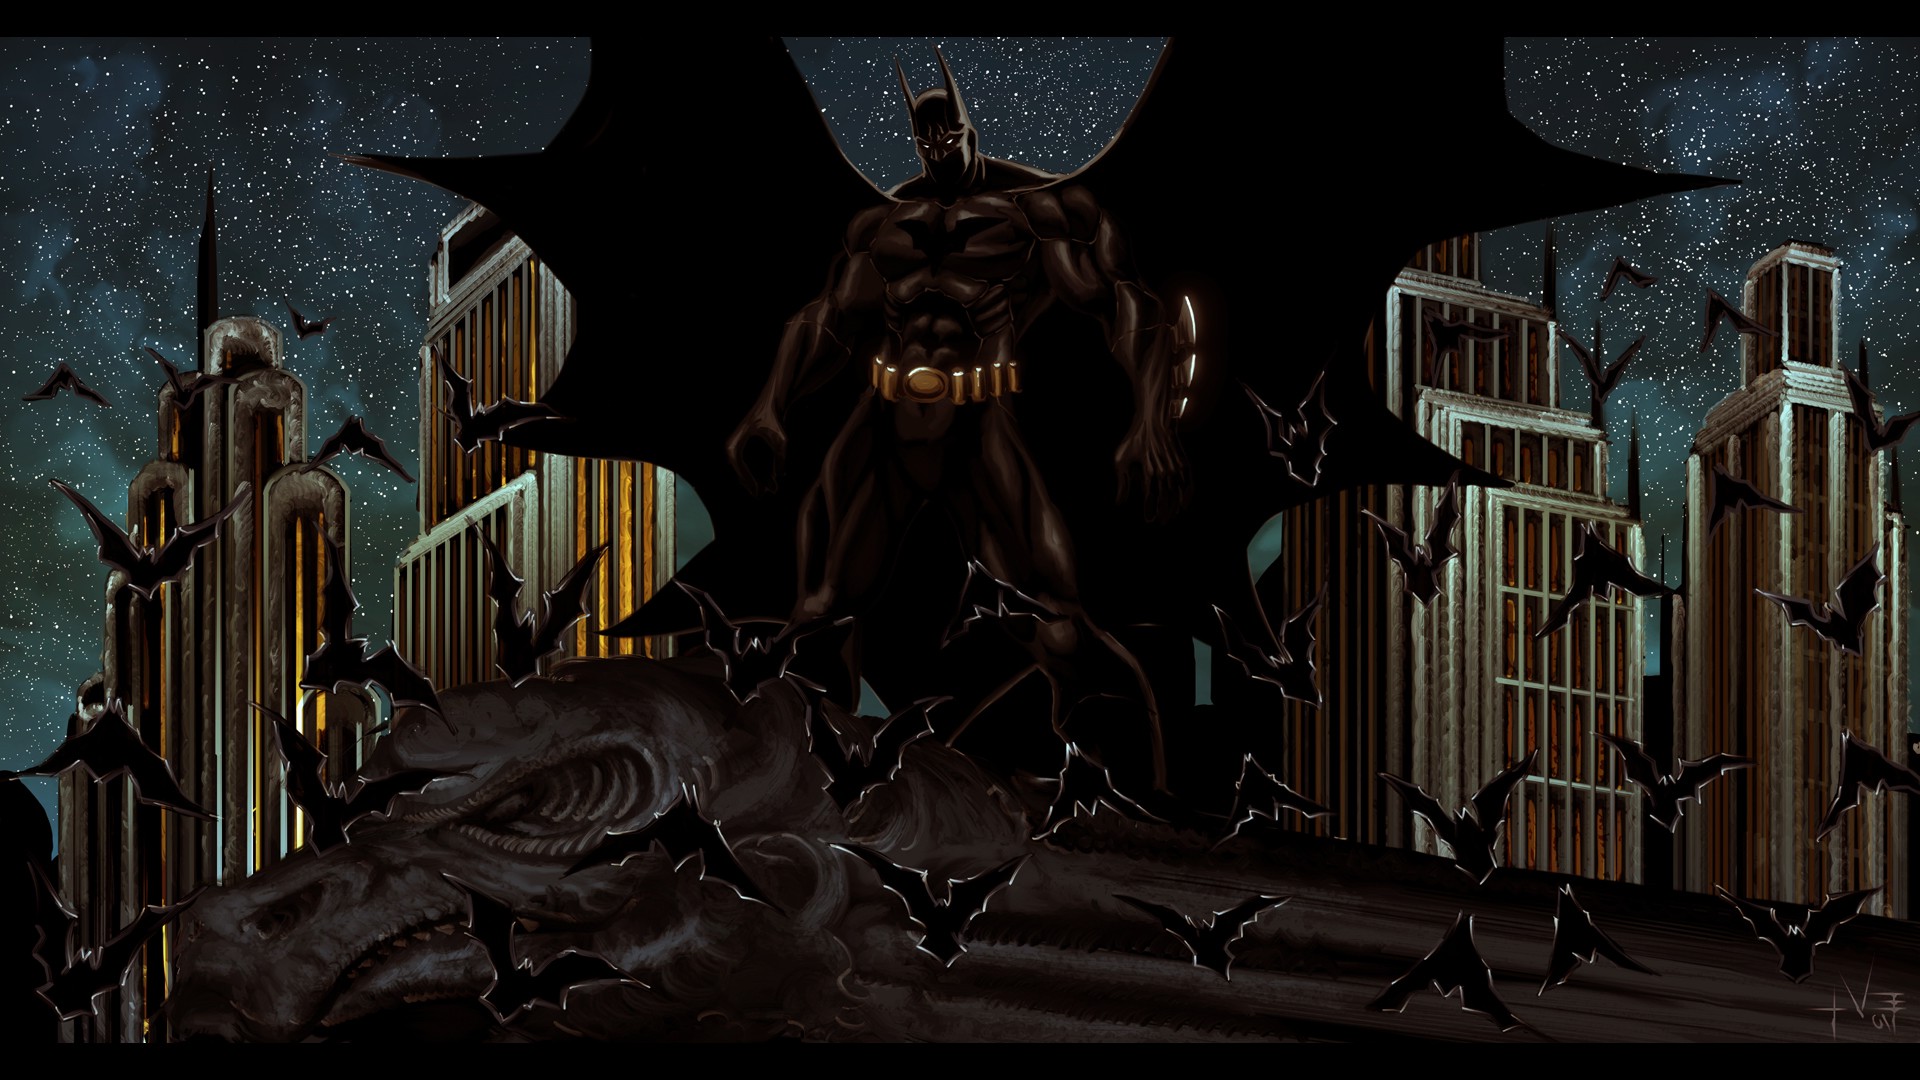 comics, Batman, Bruce Wayne Wallpaper